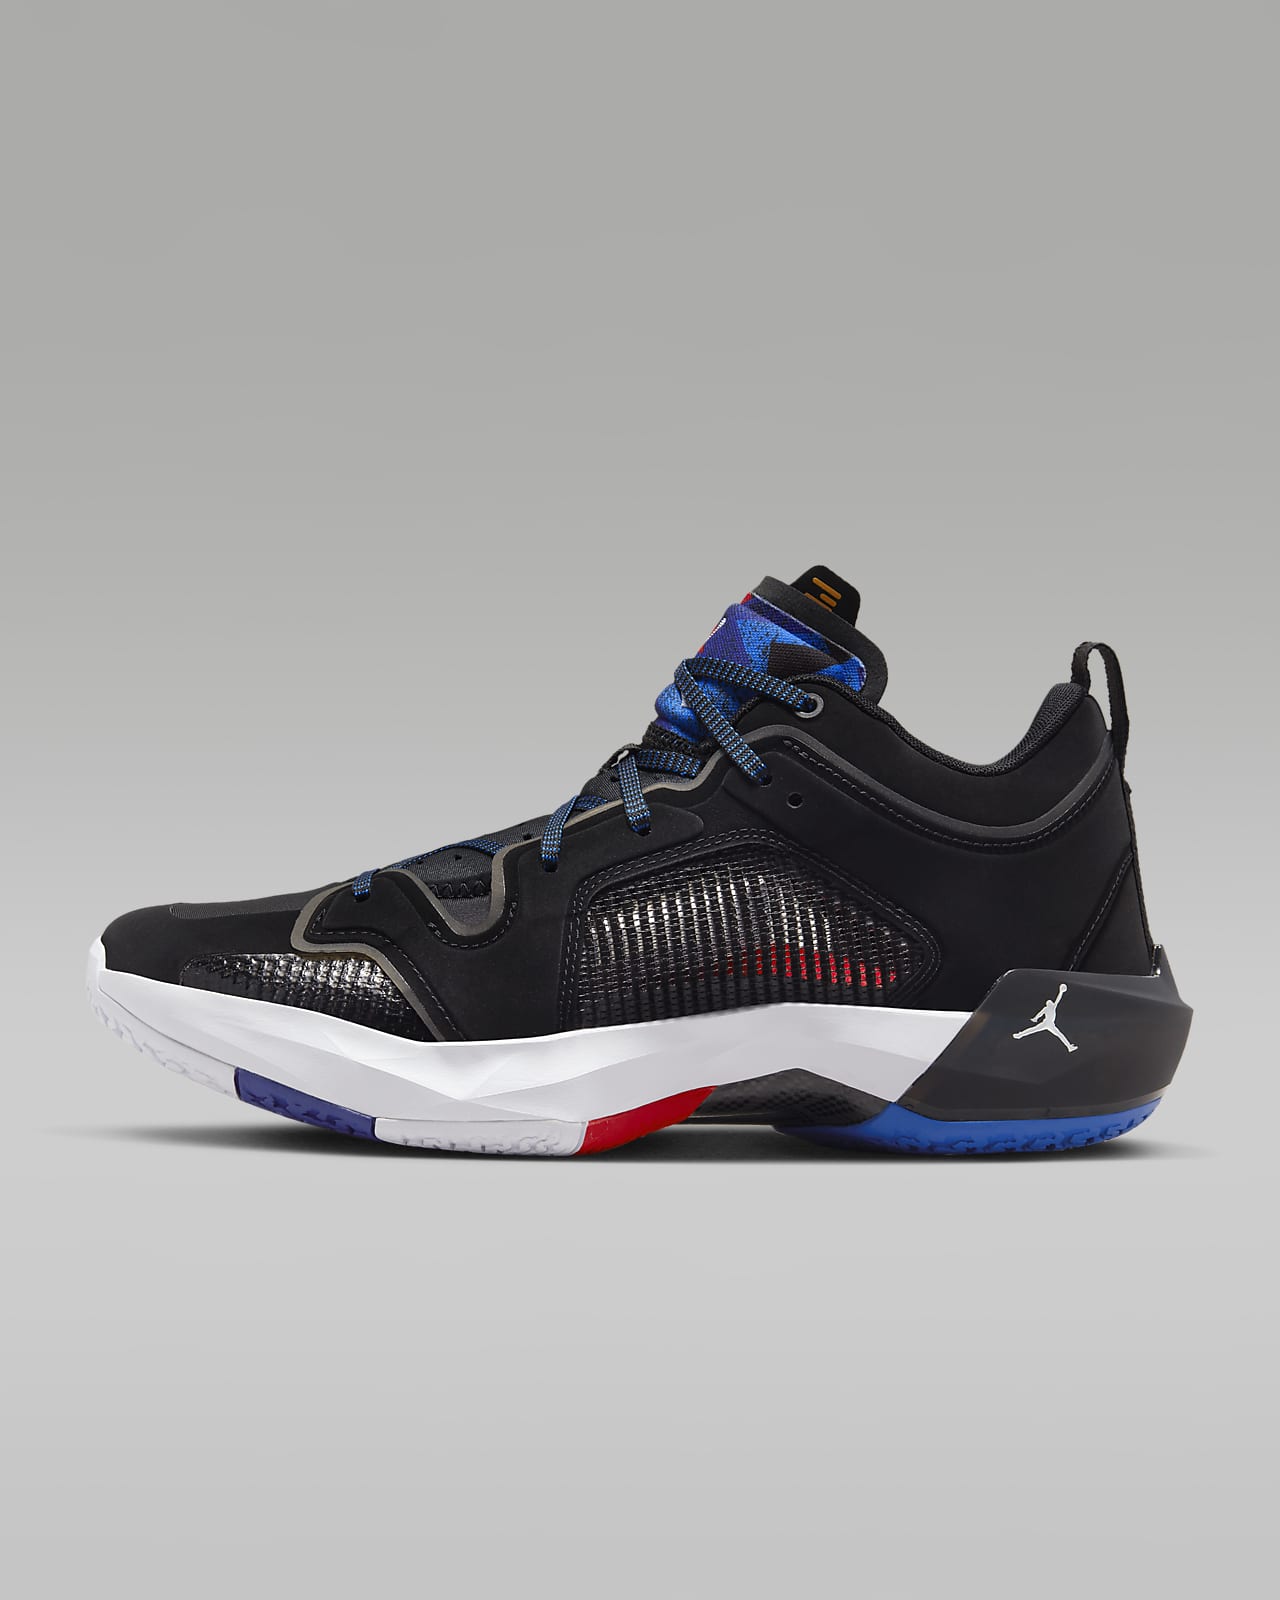 Air Jordan XXXVII Low Basketball Shoes Review